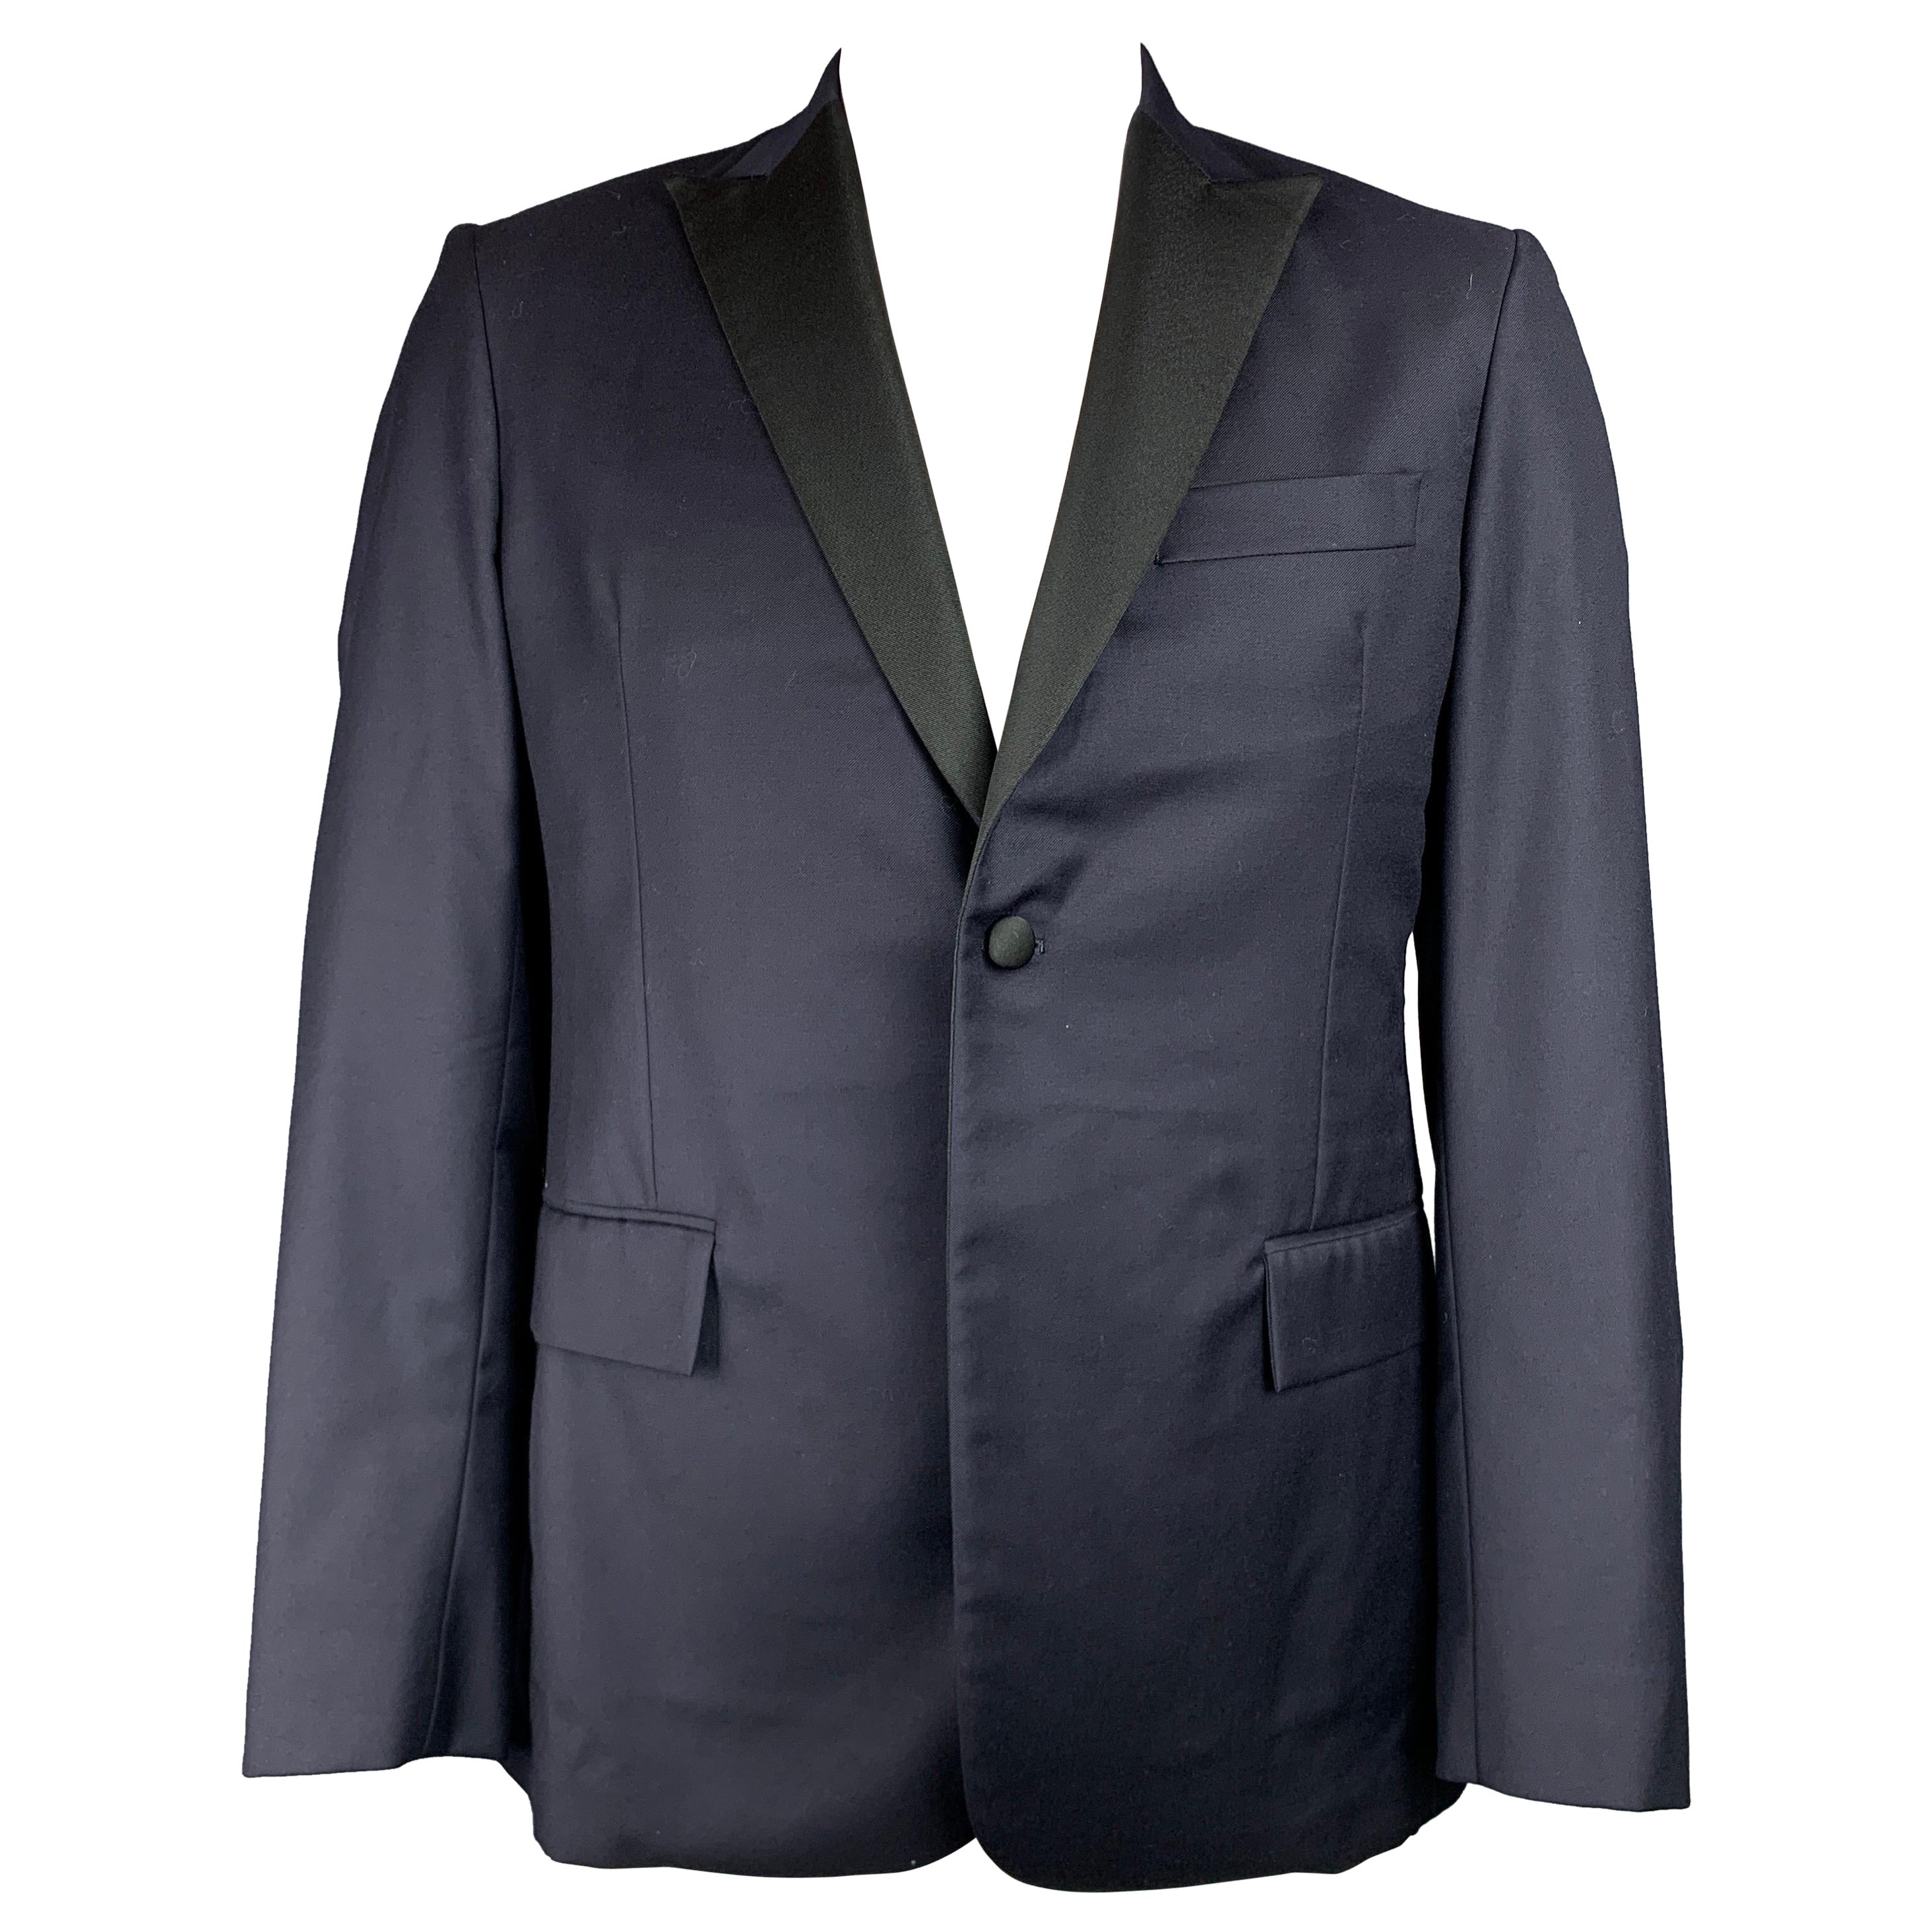 TODD SNYDER Size 42 Regular Navy & Black Wool Peak Lapel Sport Coat